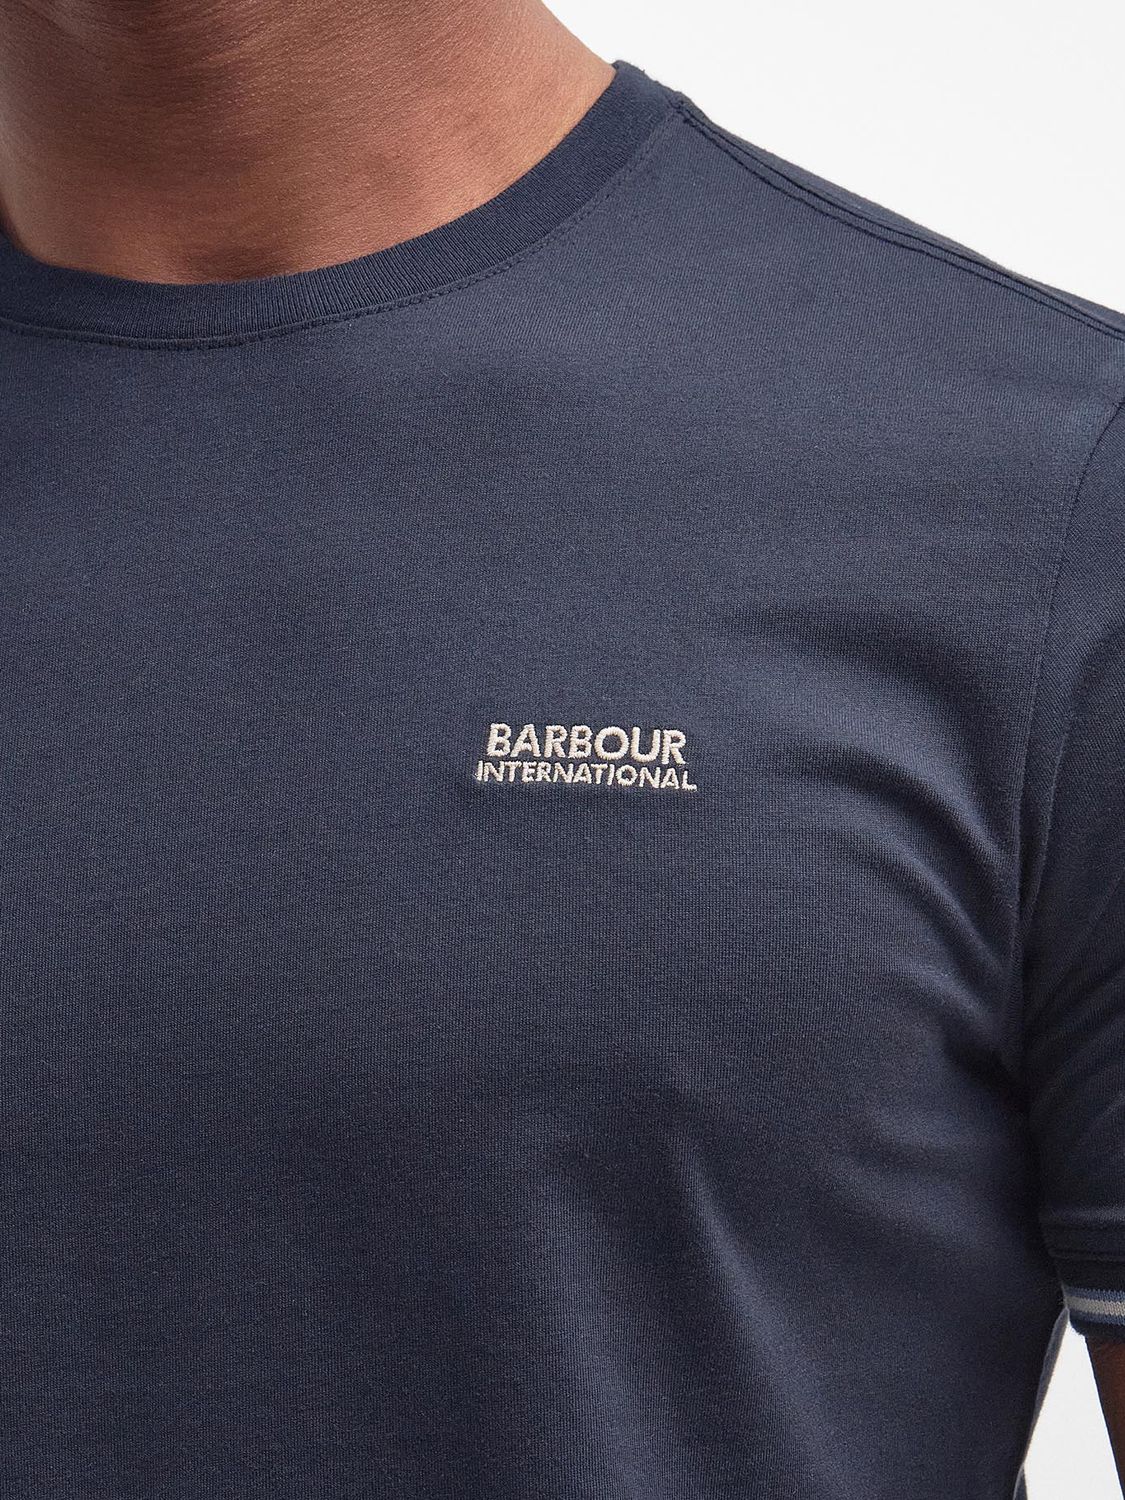 Barbour International Torque Tipped T-Shirt, Dark Navy, S